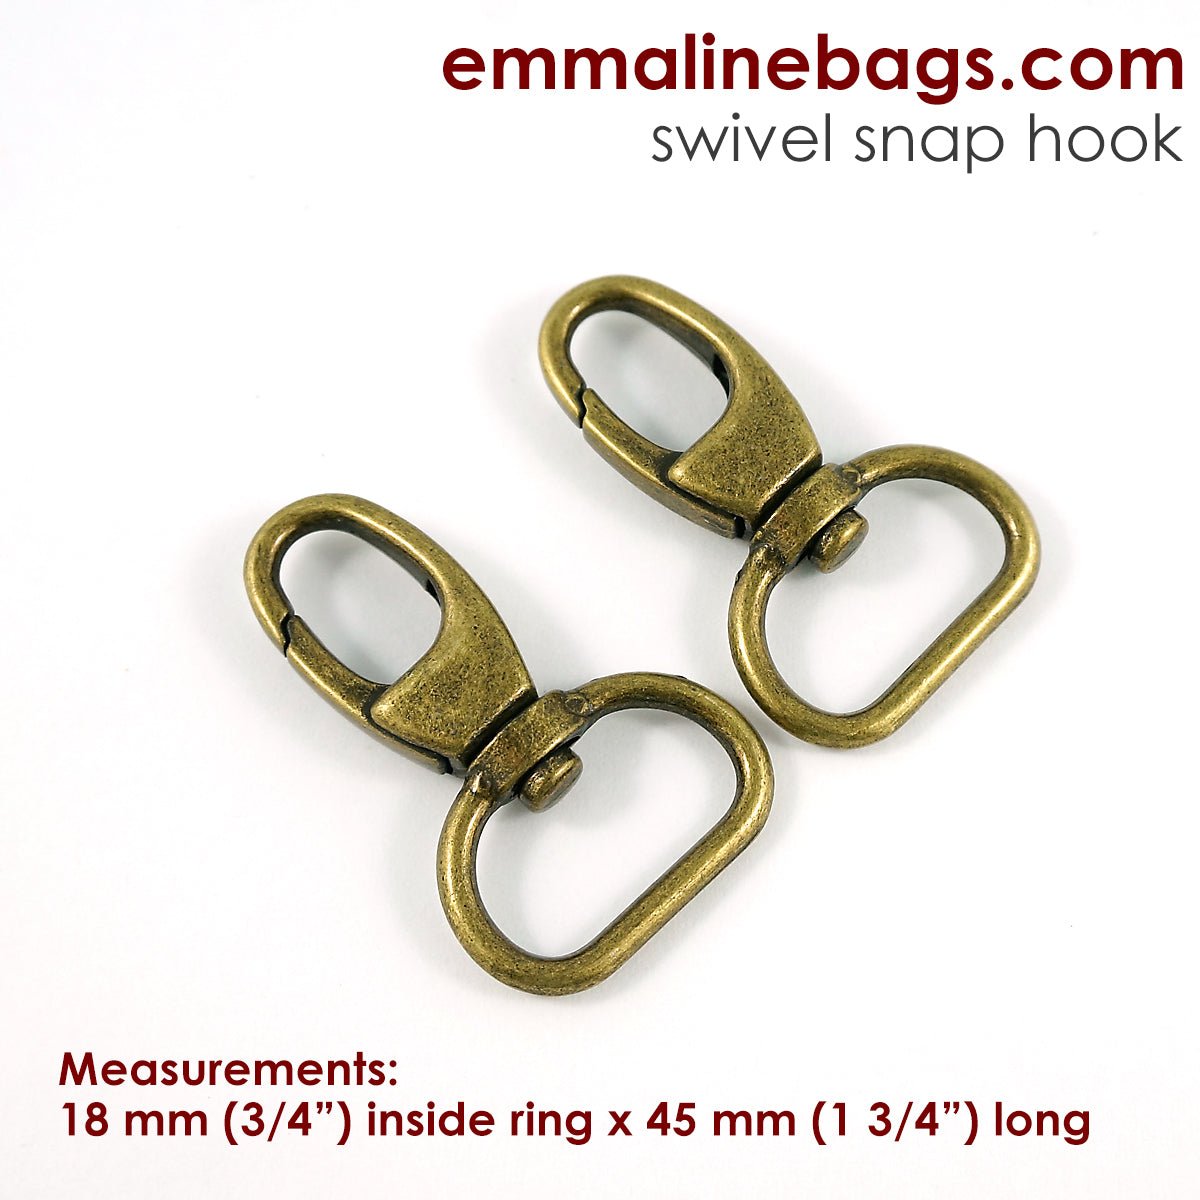 Swivel Snap Hooks: Flat Hook Profile - 3/4(18mm) - Gunmetal finish - 2 Pack